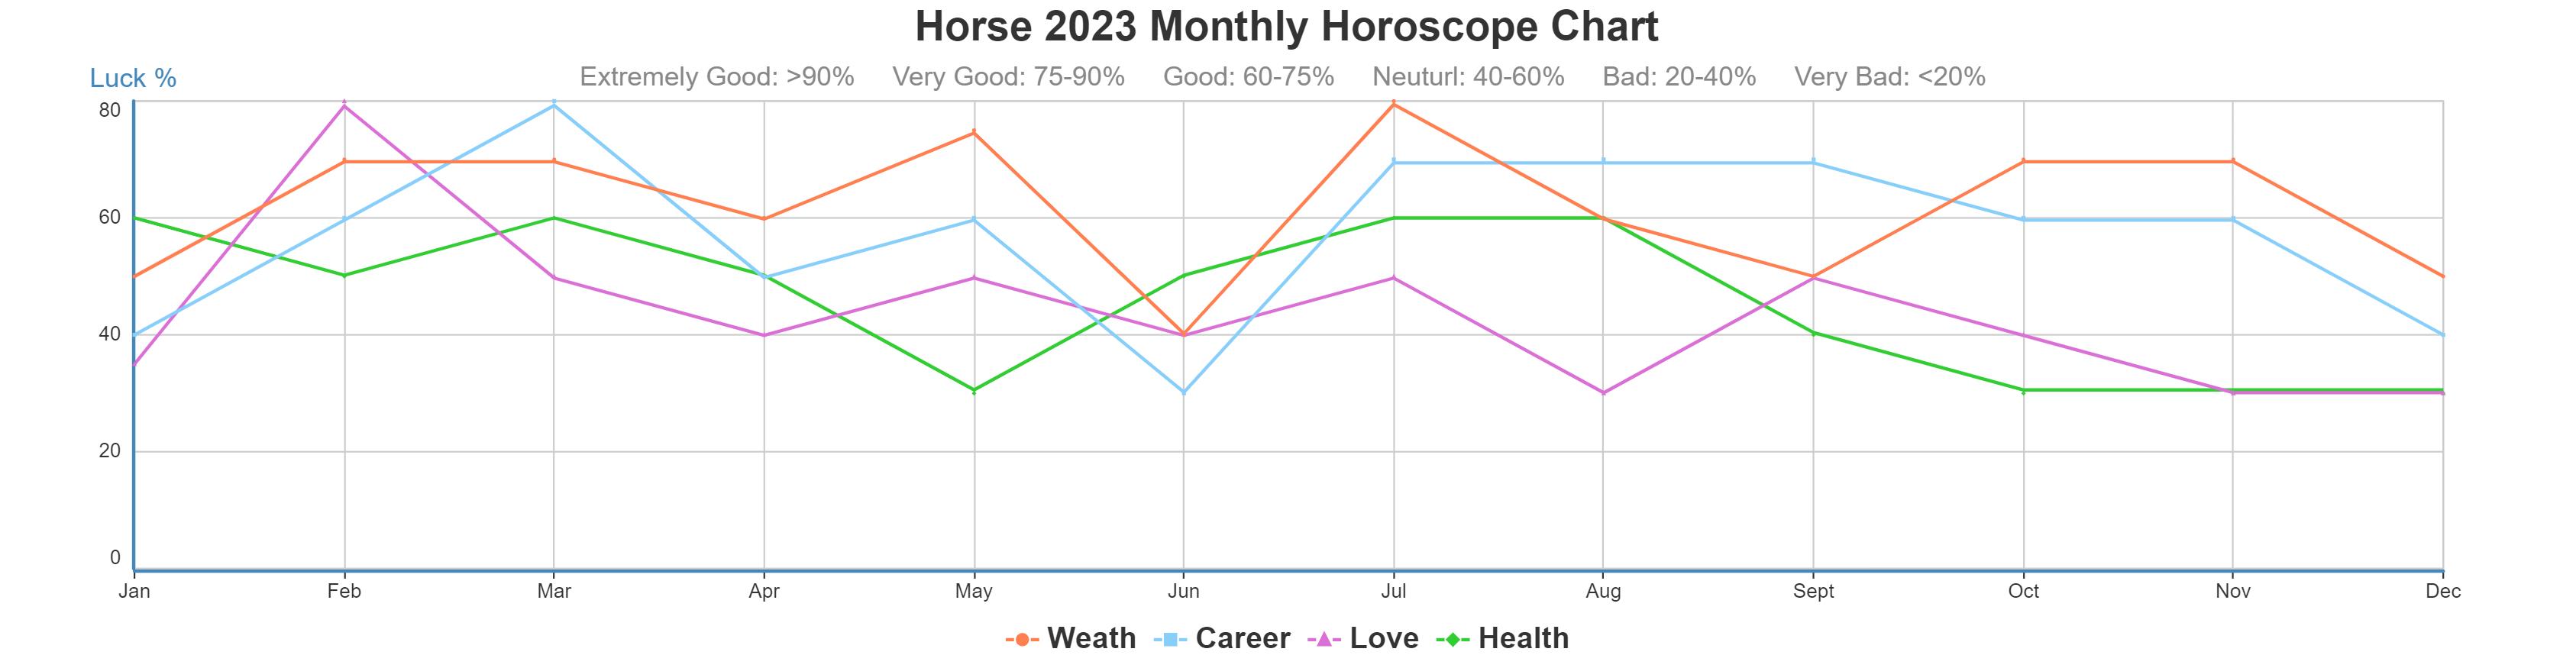 Horse 2023 monthly horoscope